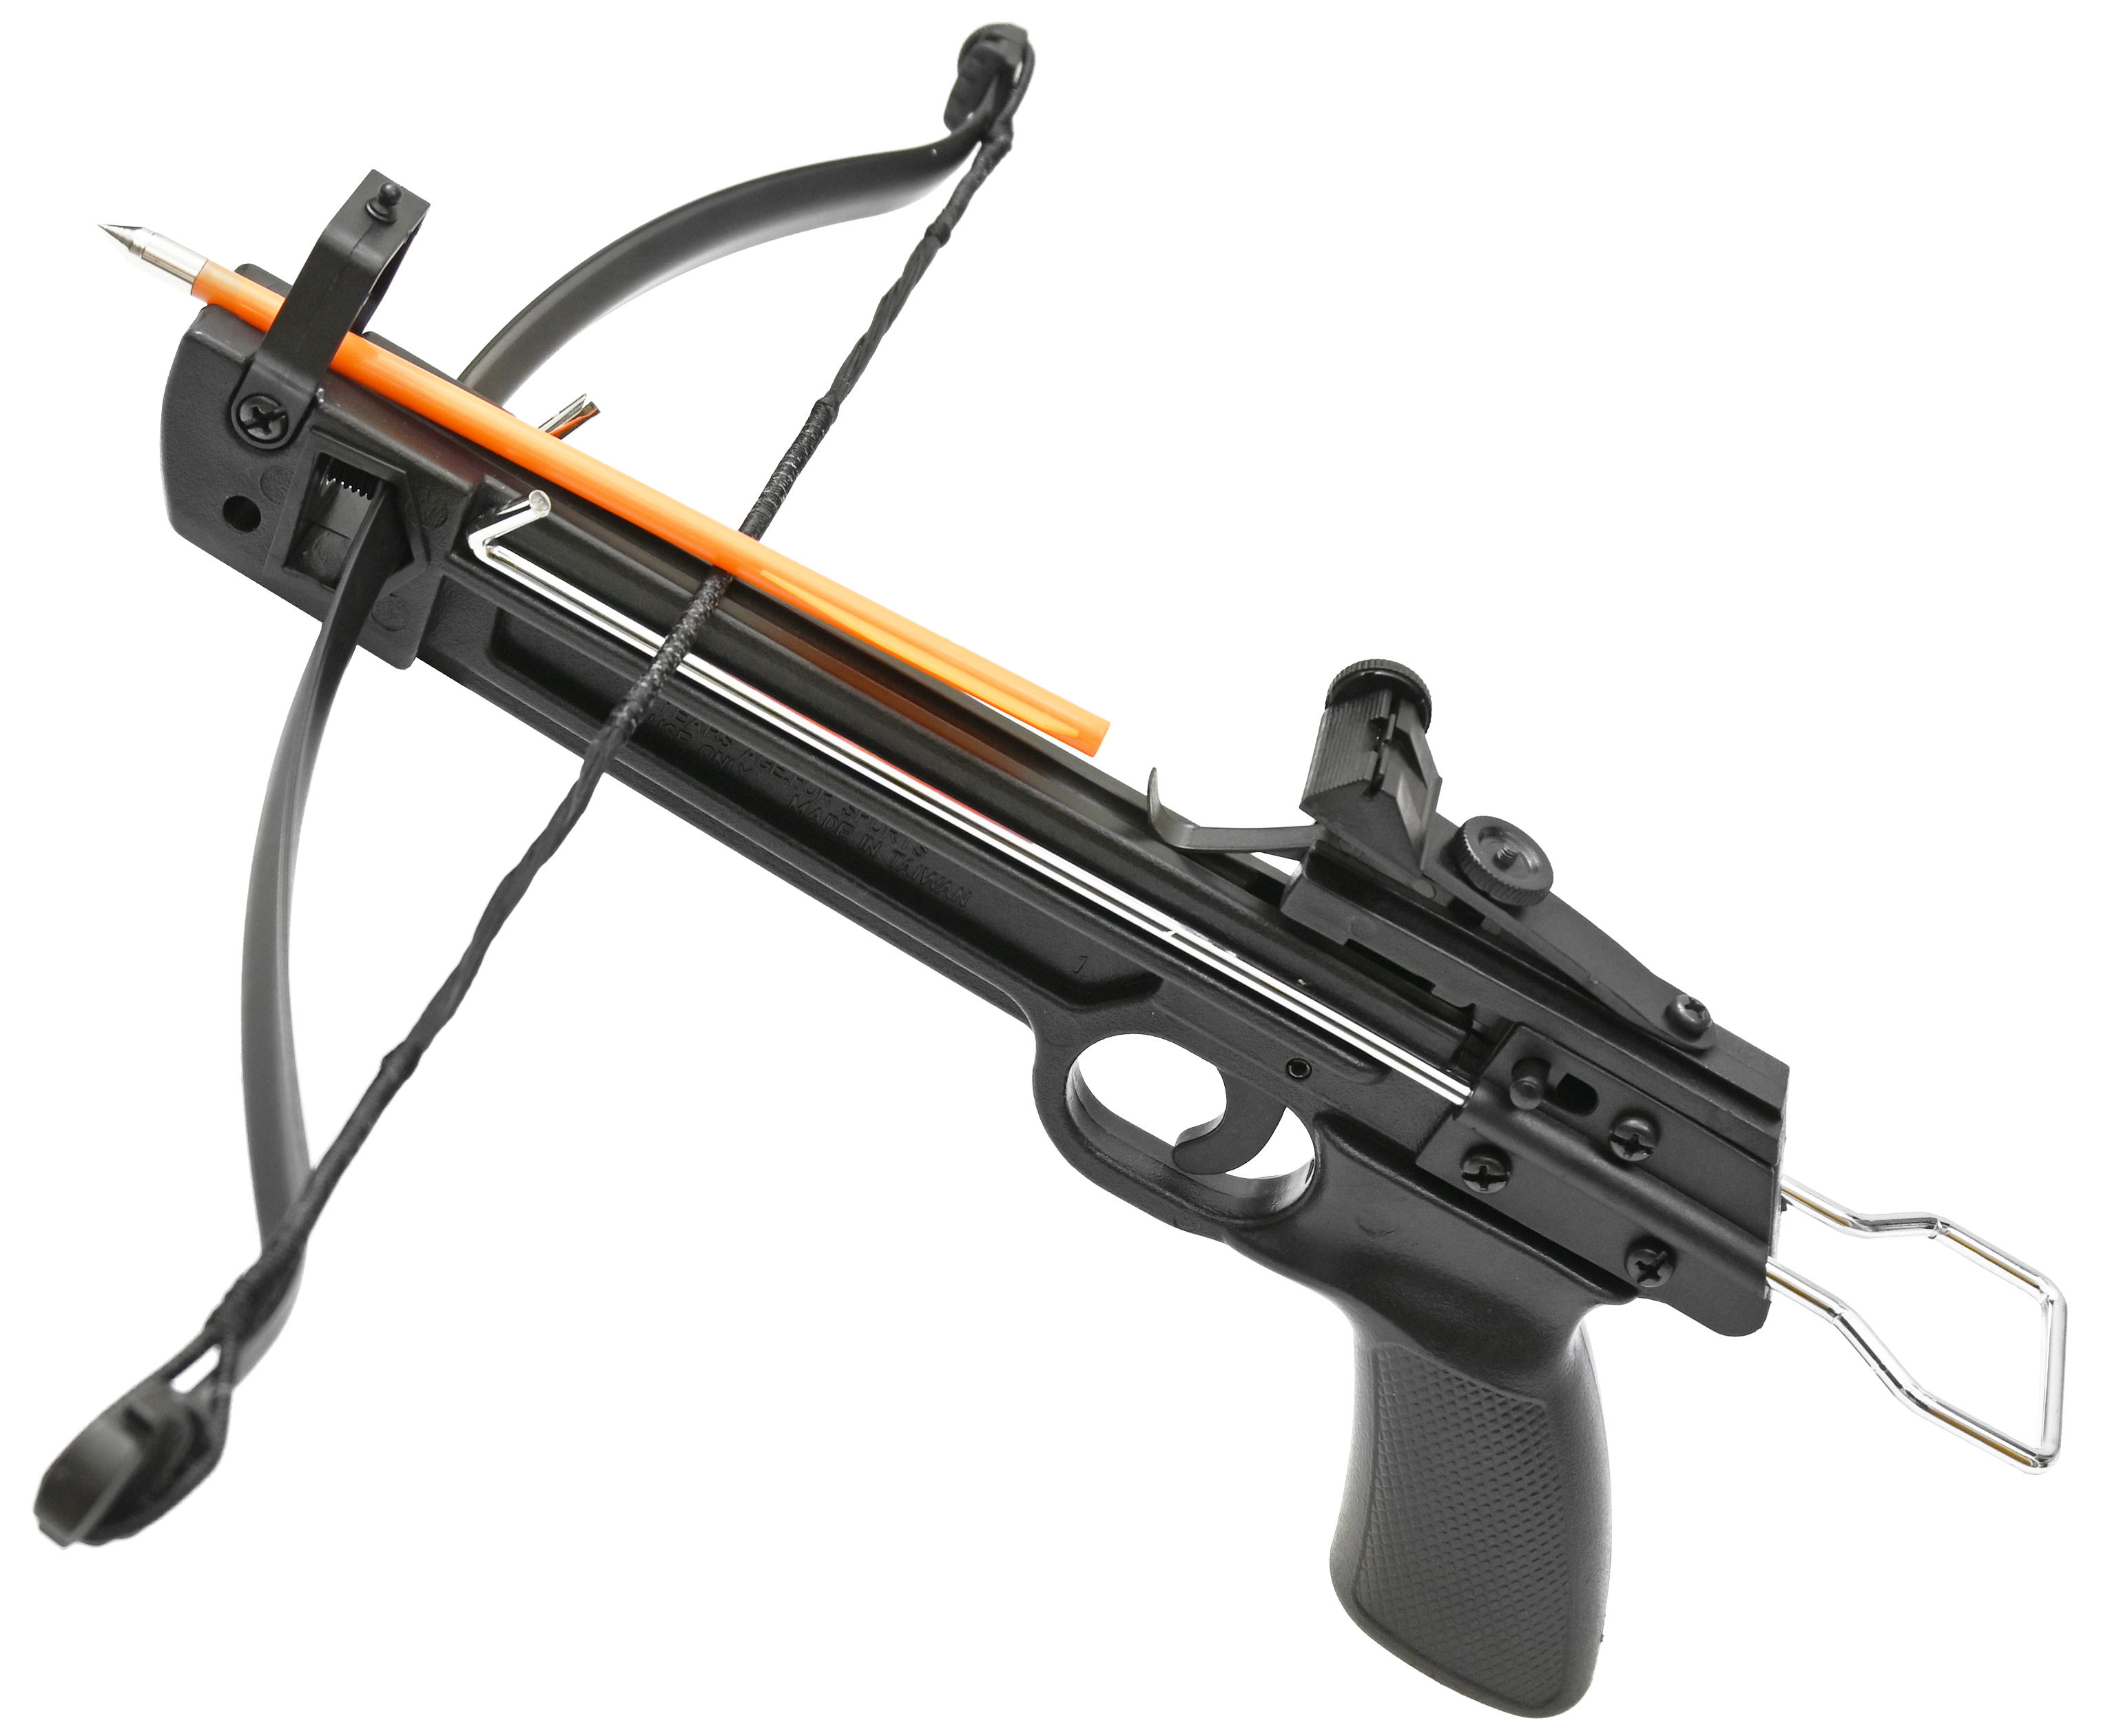 Арбалет-пистолет Remington Base, black, пластик